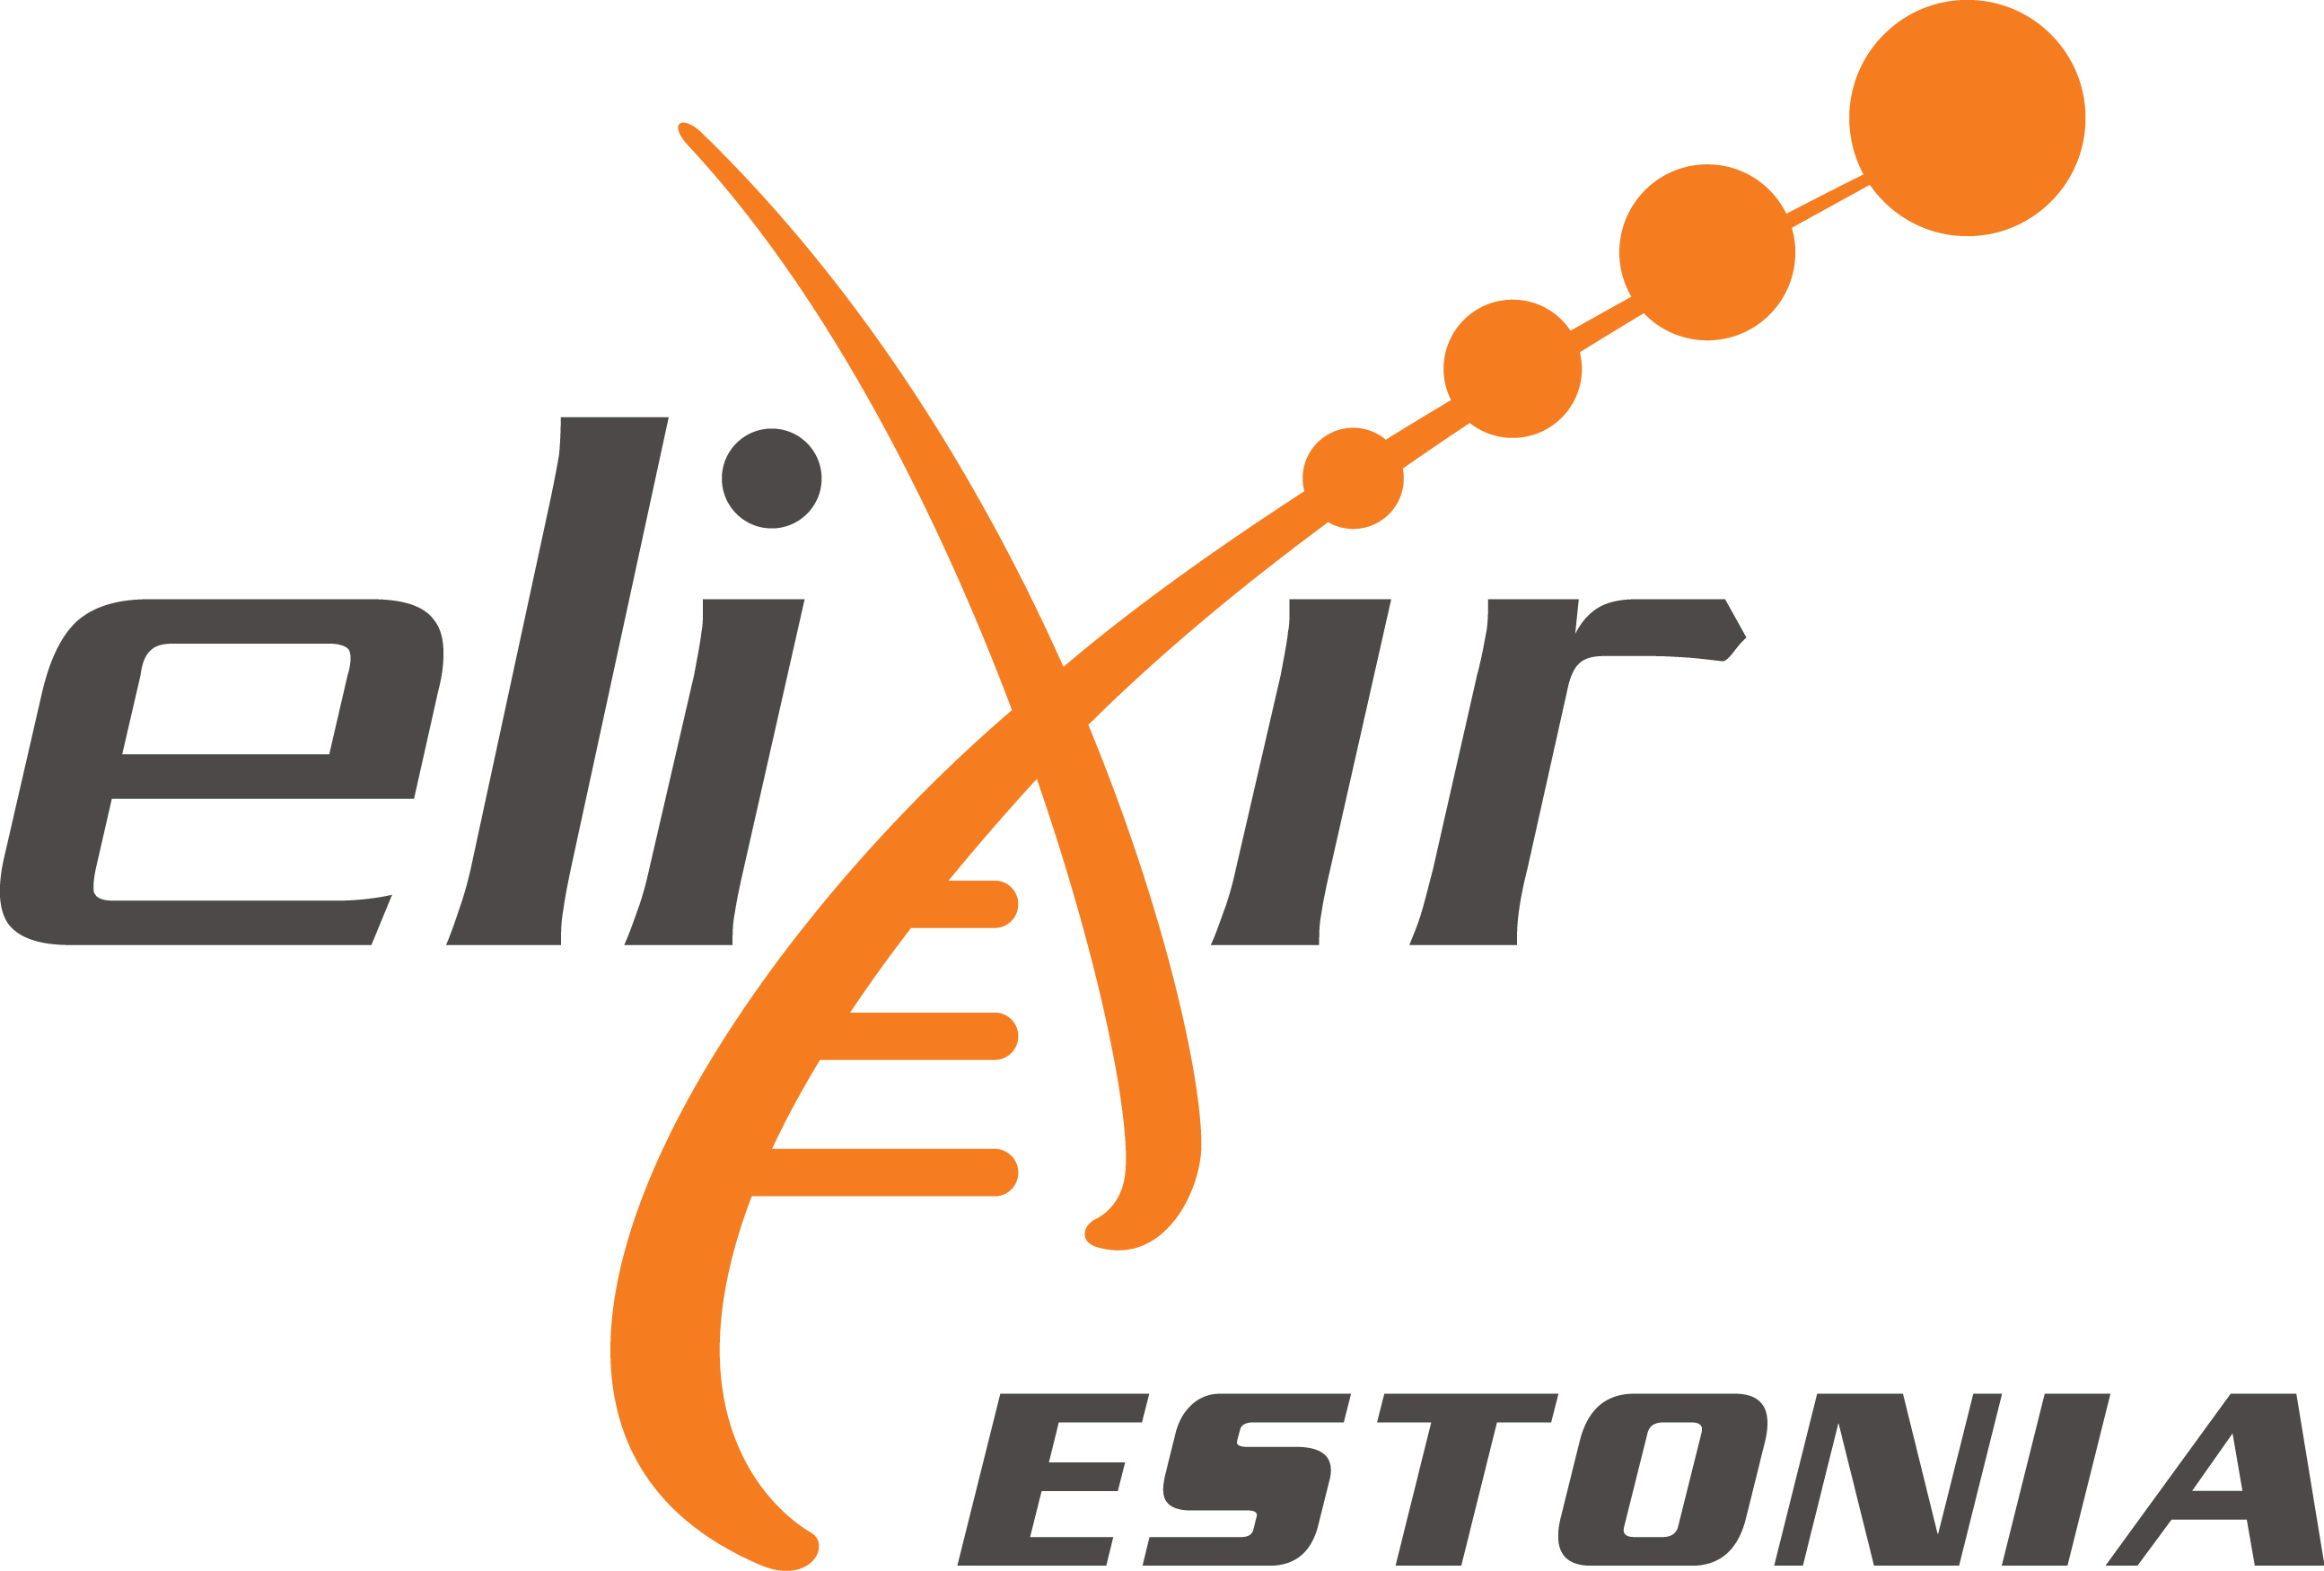 ELIXIR Estonia Logo